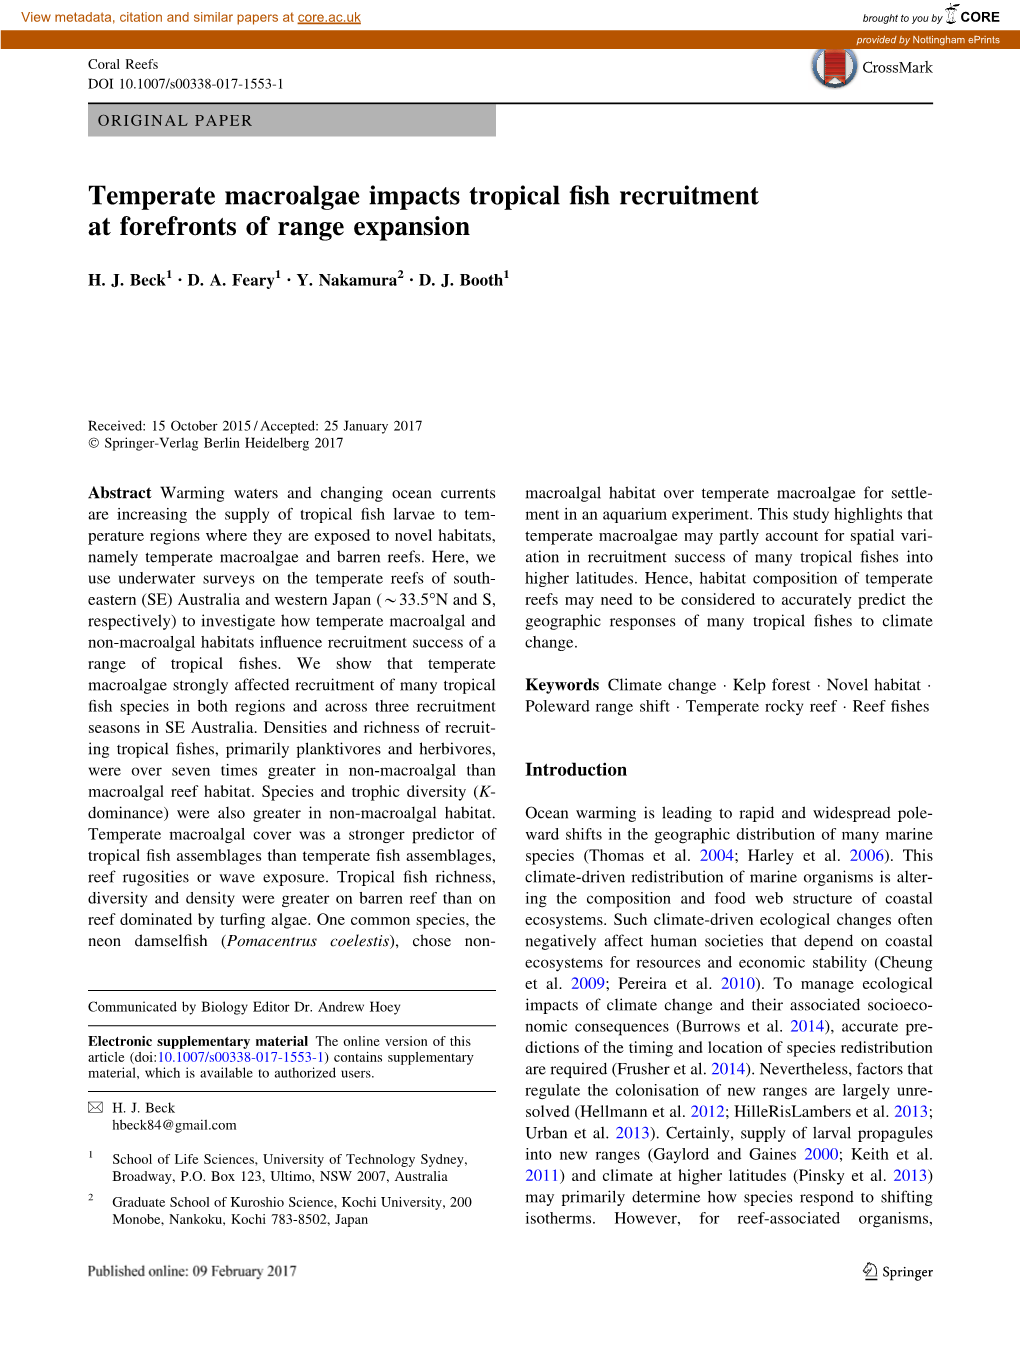 Temperate Macroalgae Impacts Tropical Fish Recruitment At